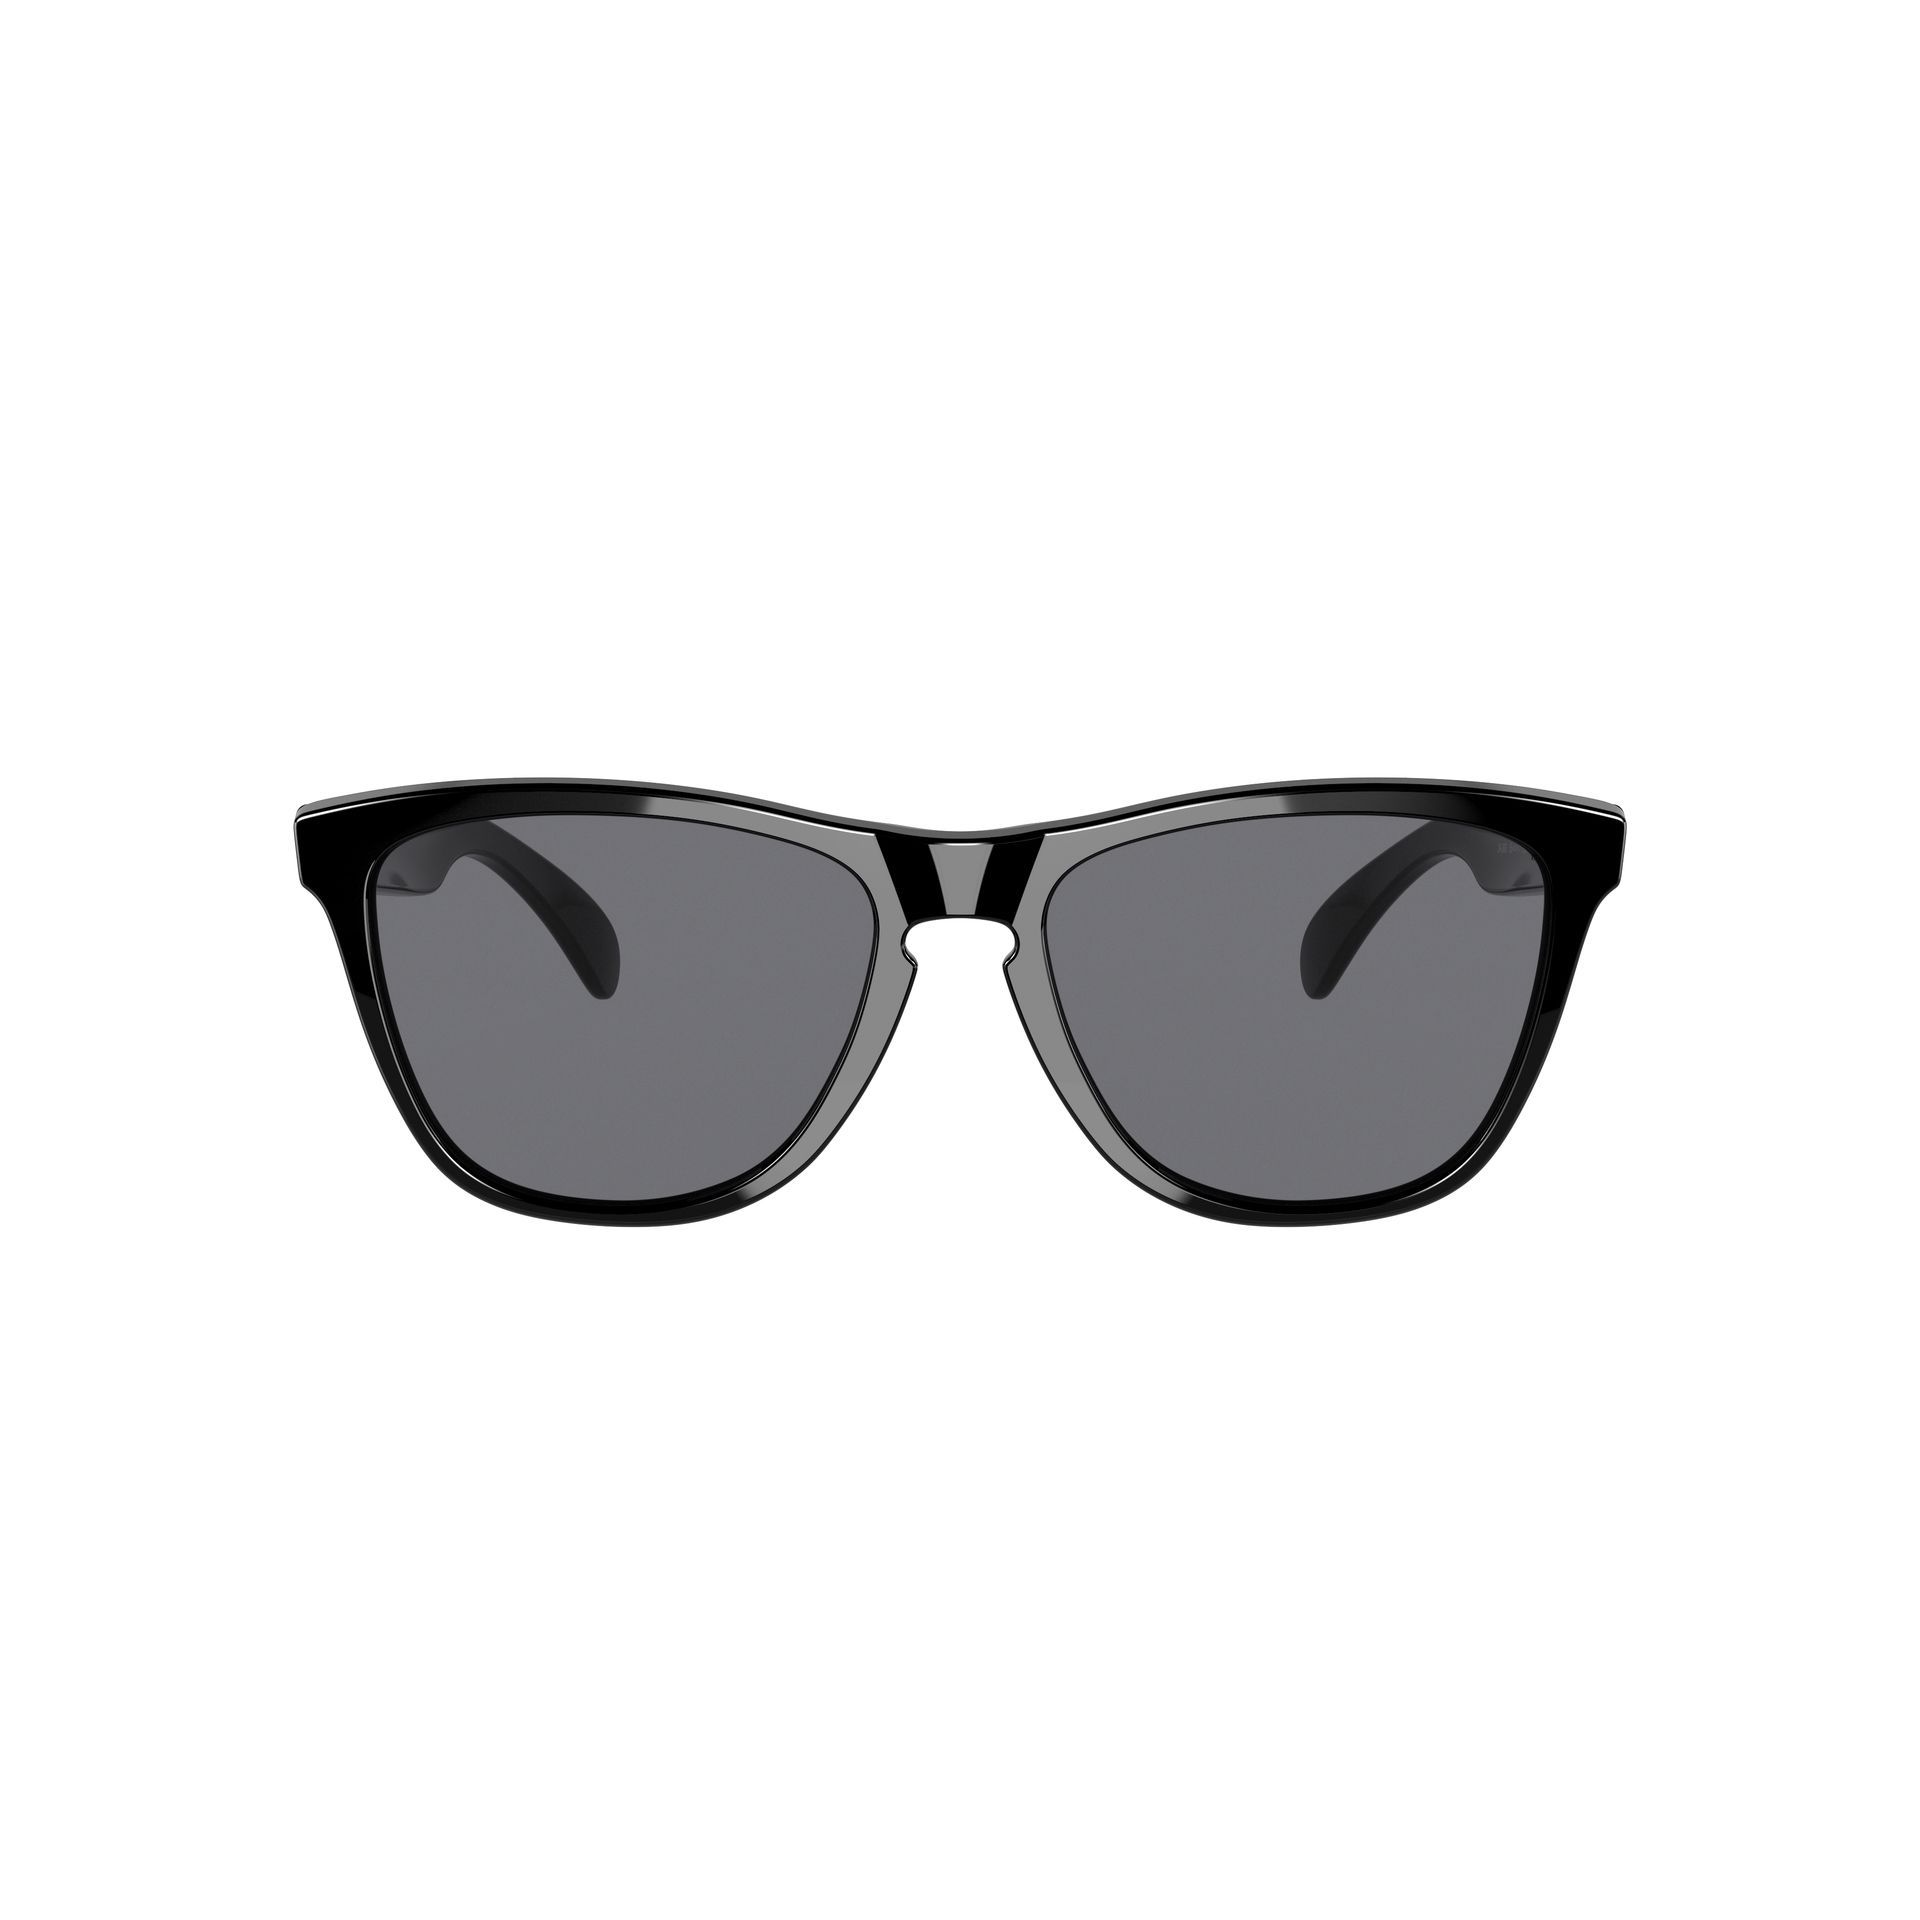 0OO9013 Square Sunglasses 24-306 - size 55